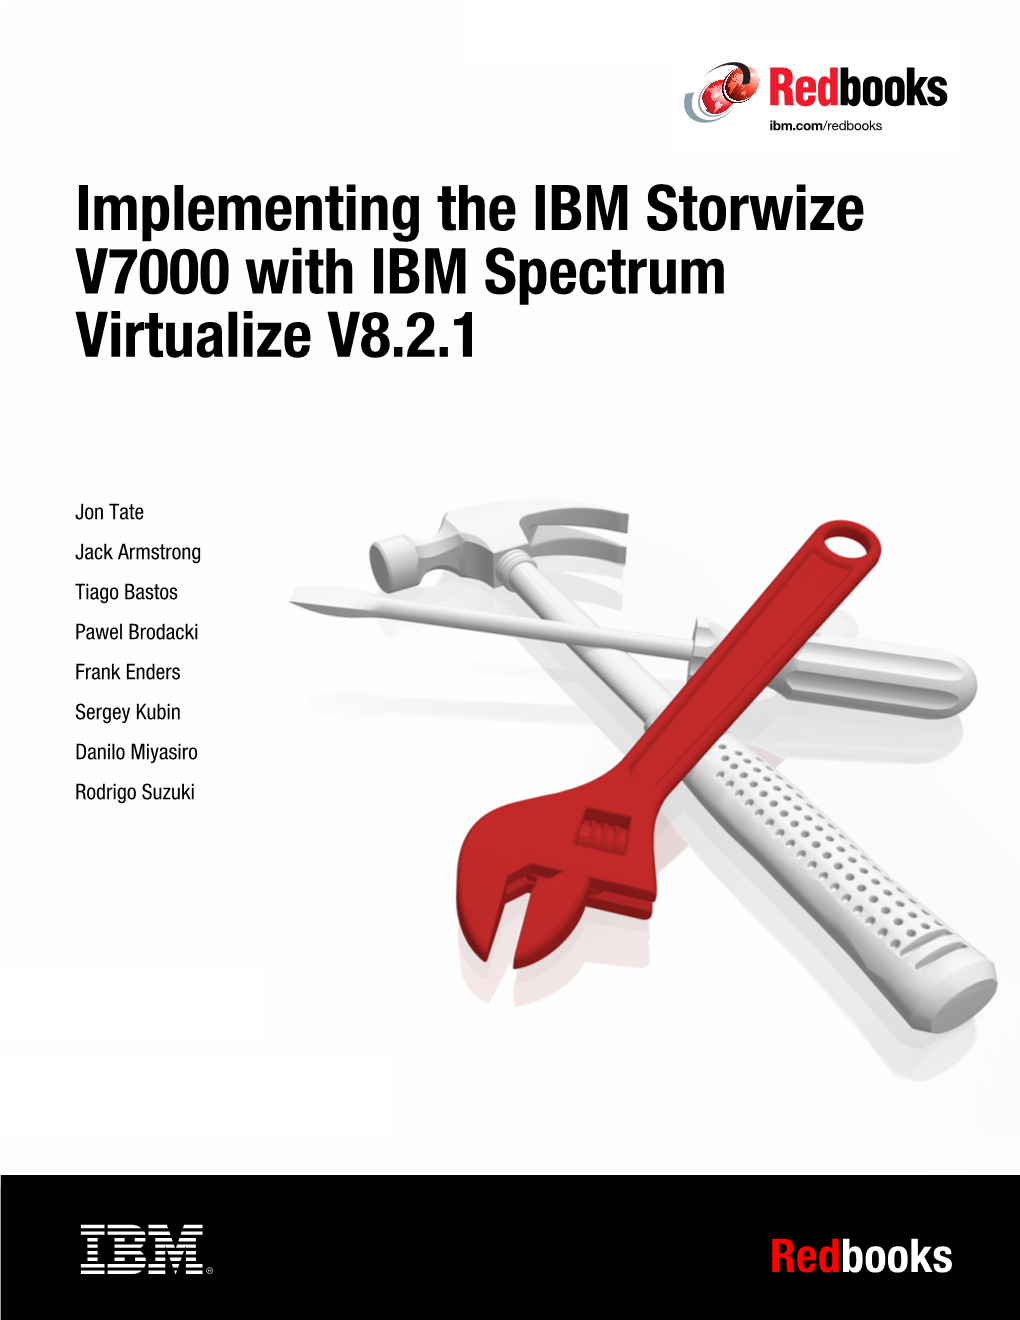 Implementing the IBM Storwize V7000 with IBM Spectrum Virtualize V8.2.1